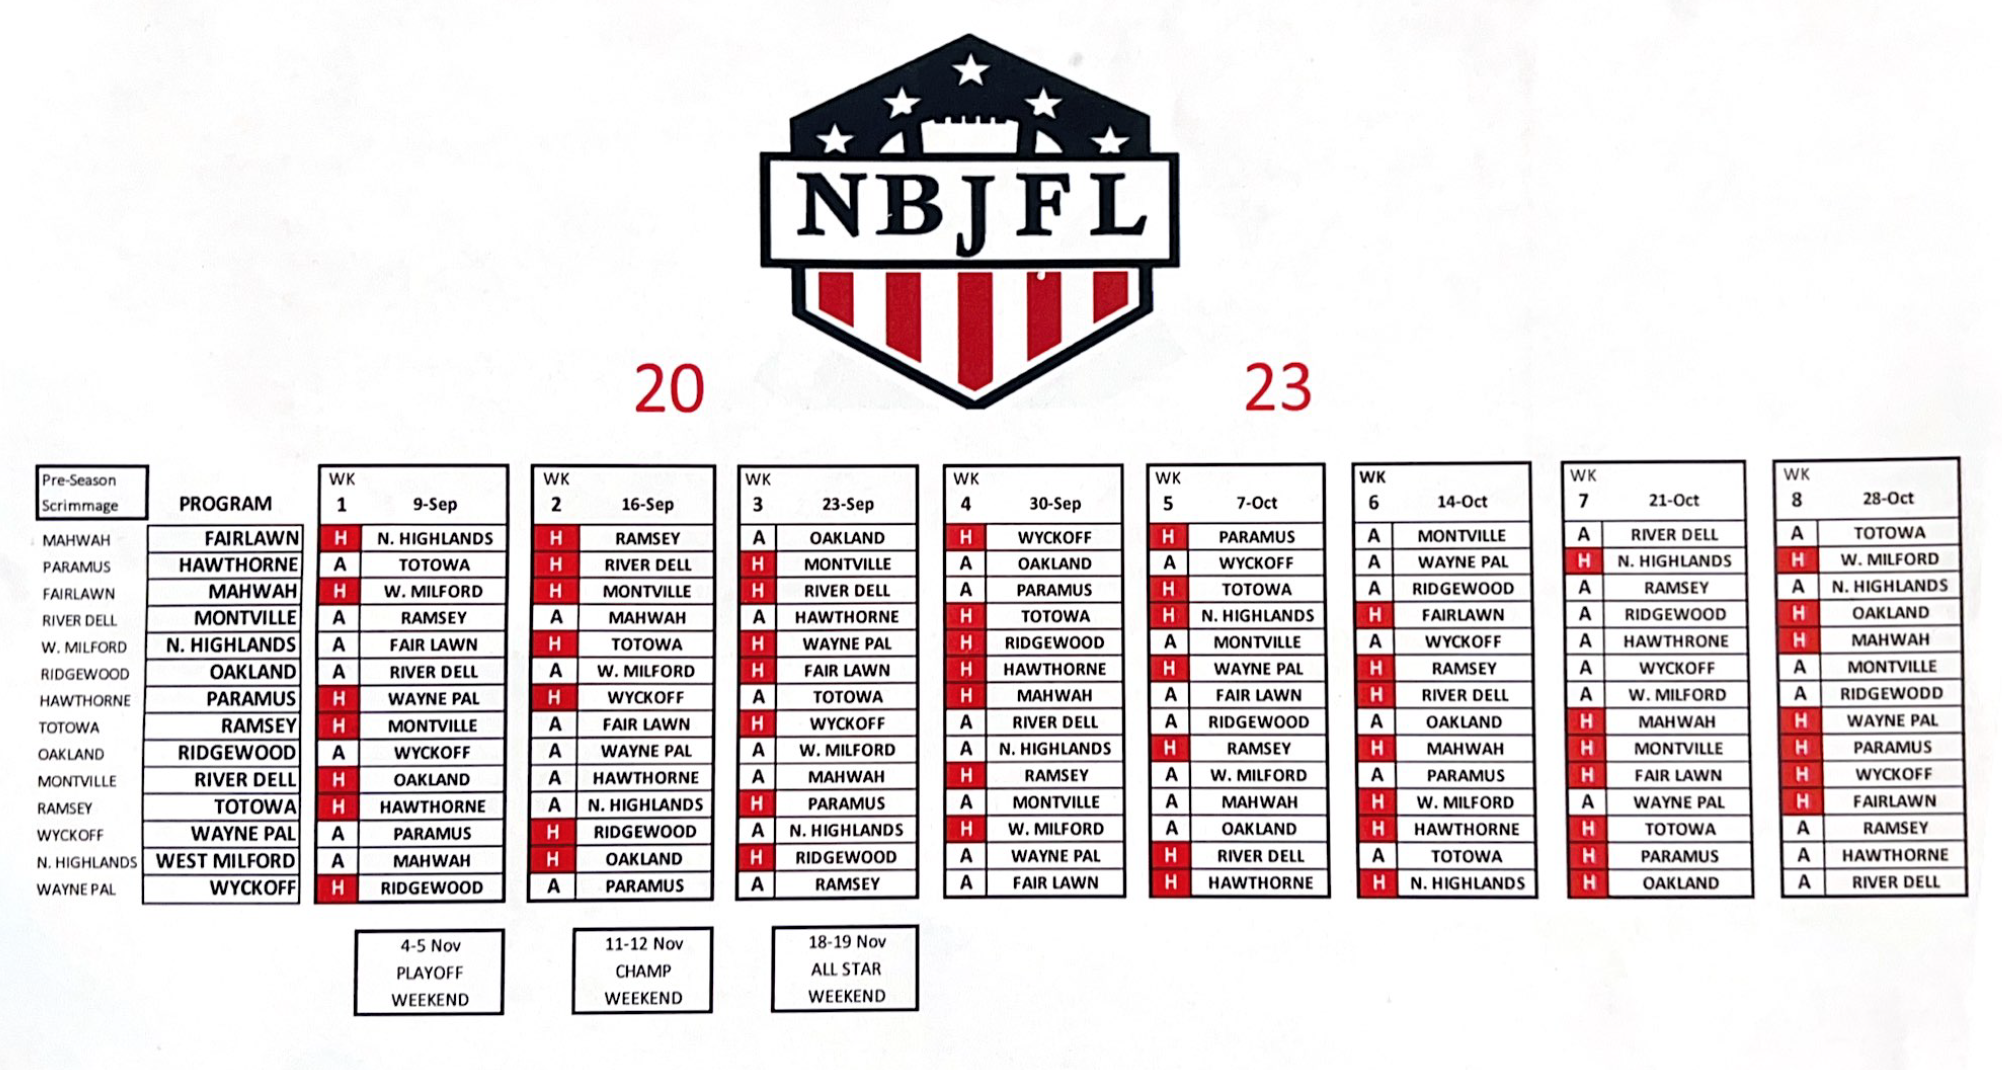 NFL schedule 2019: Here is who Giants play in Week 1